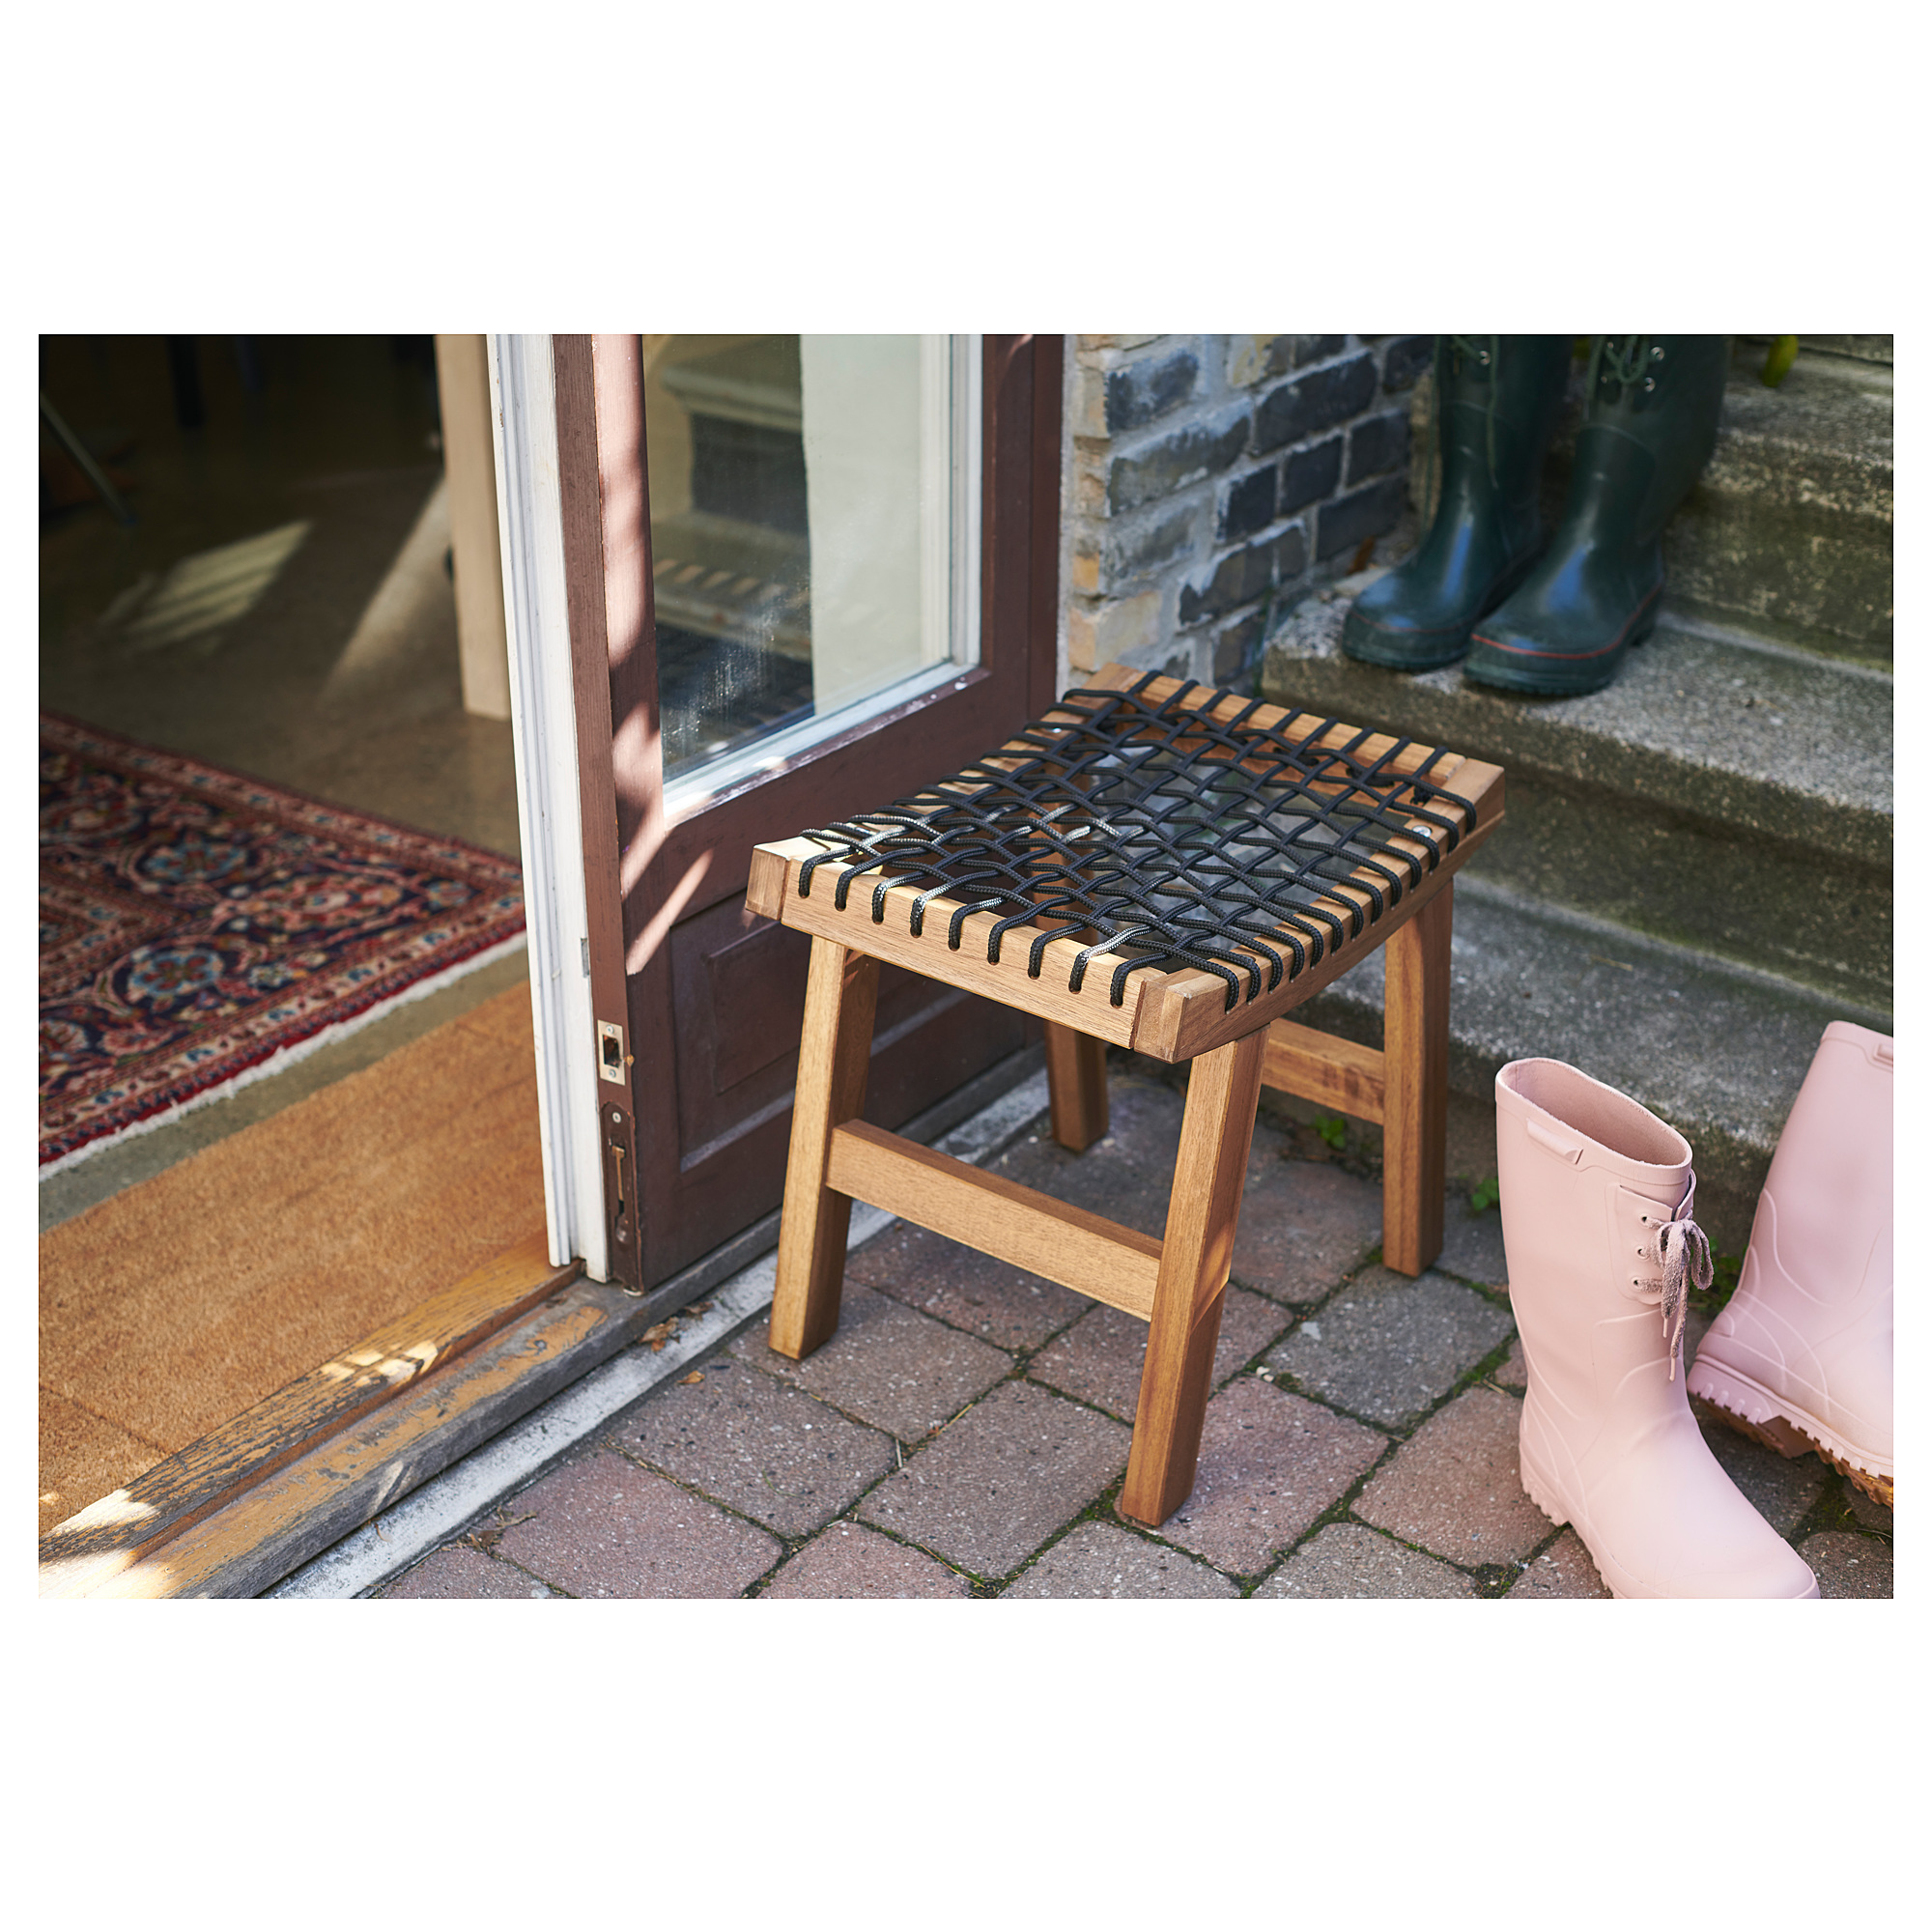 STACKHOLMEN stool, outdoor